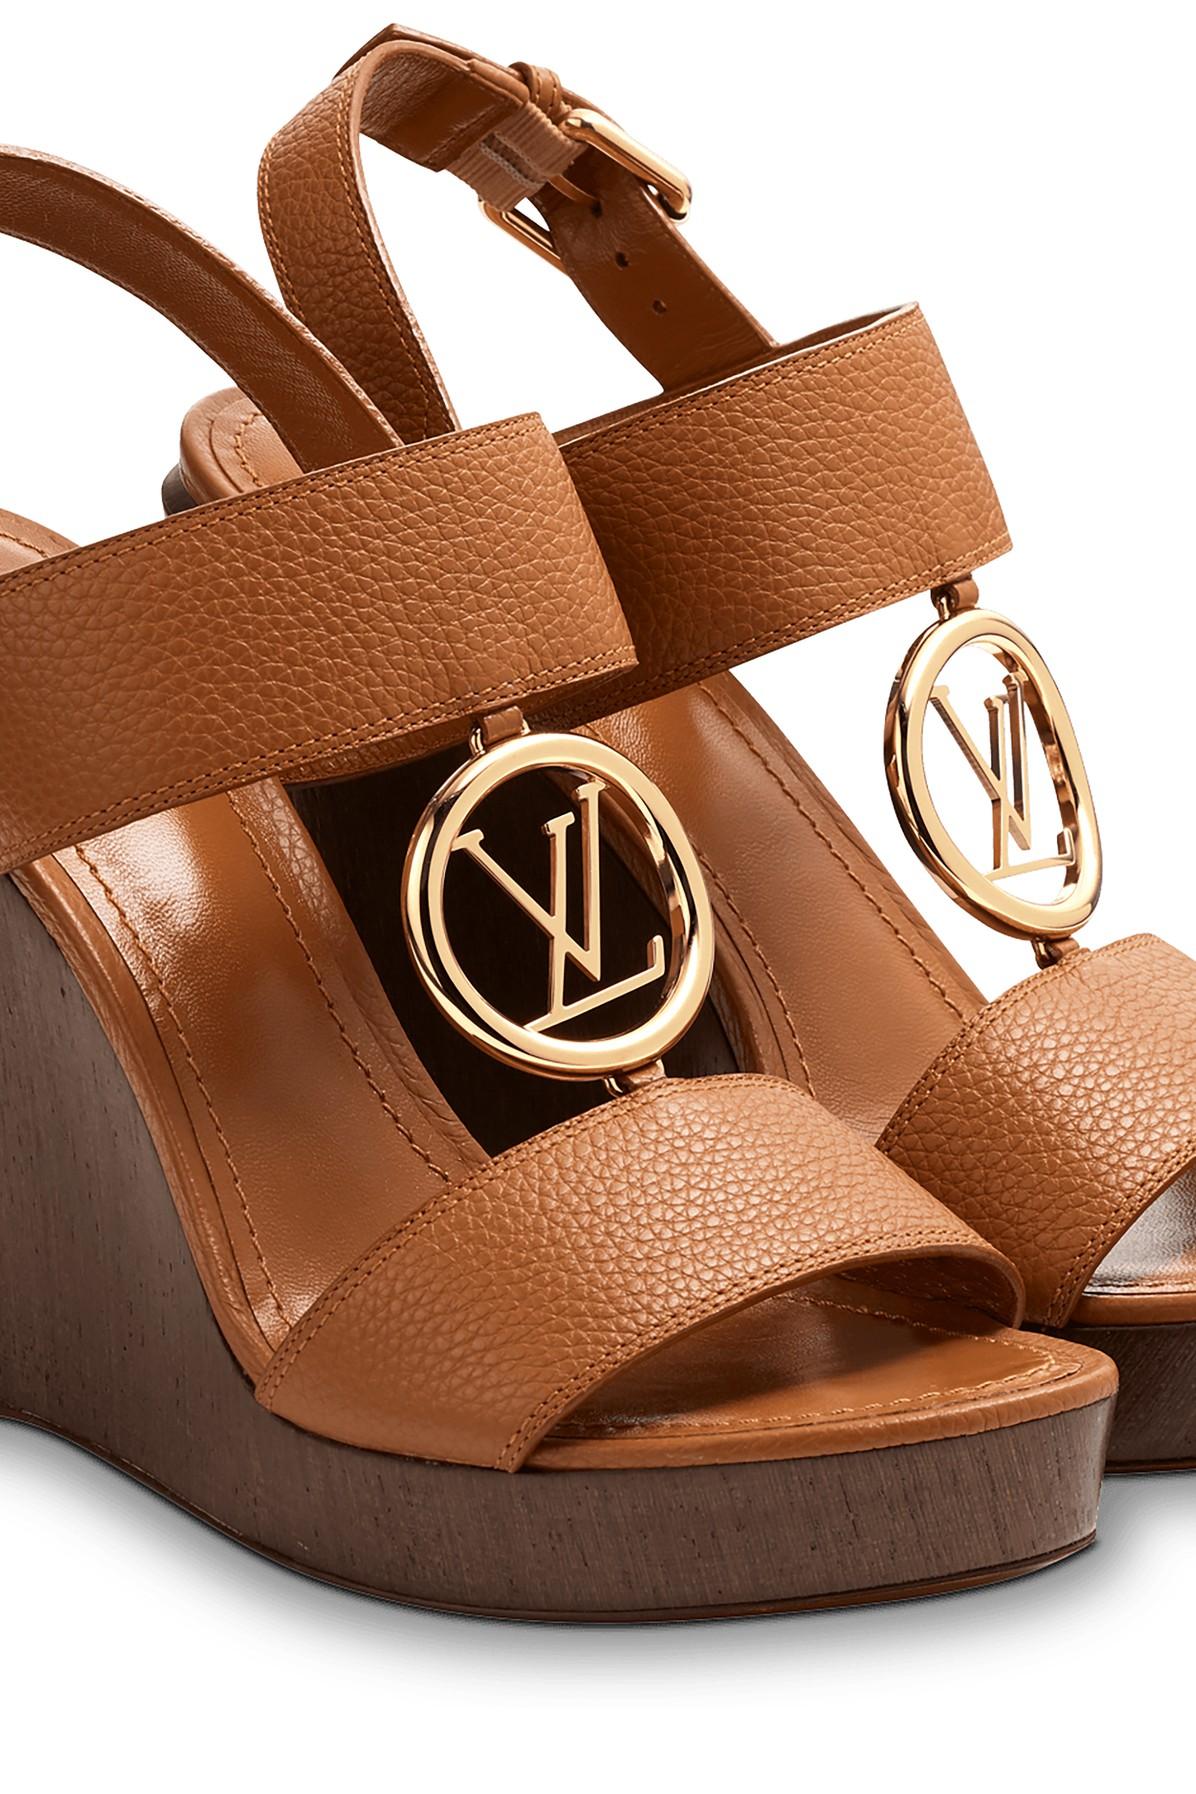 Louis Vuitton Brown Monogram Coated Canvases Sandals Wedge Heels